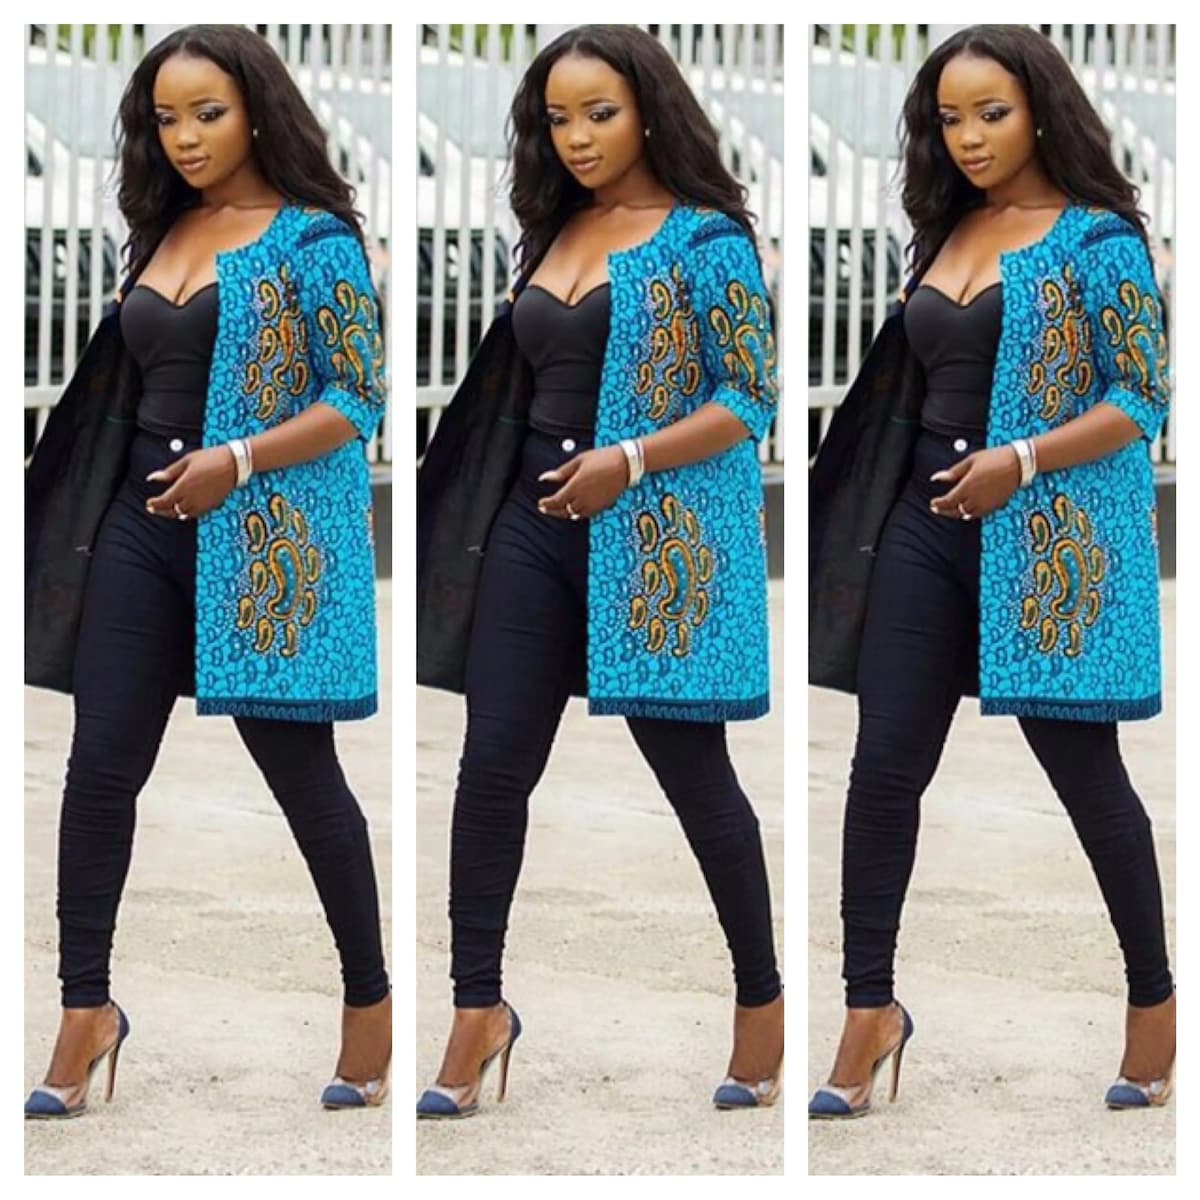 nigerian dresses, nigerian everyday fashion,
trendy ankara styles